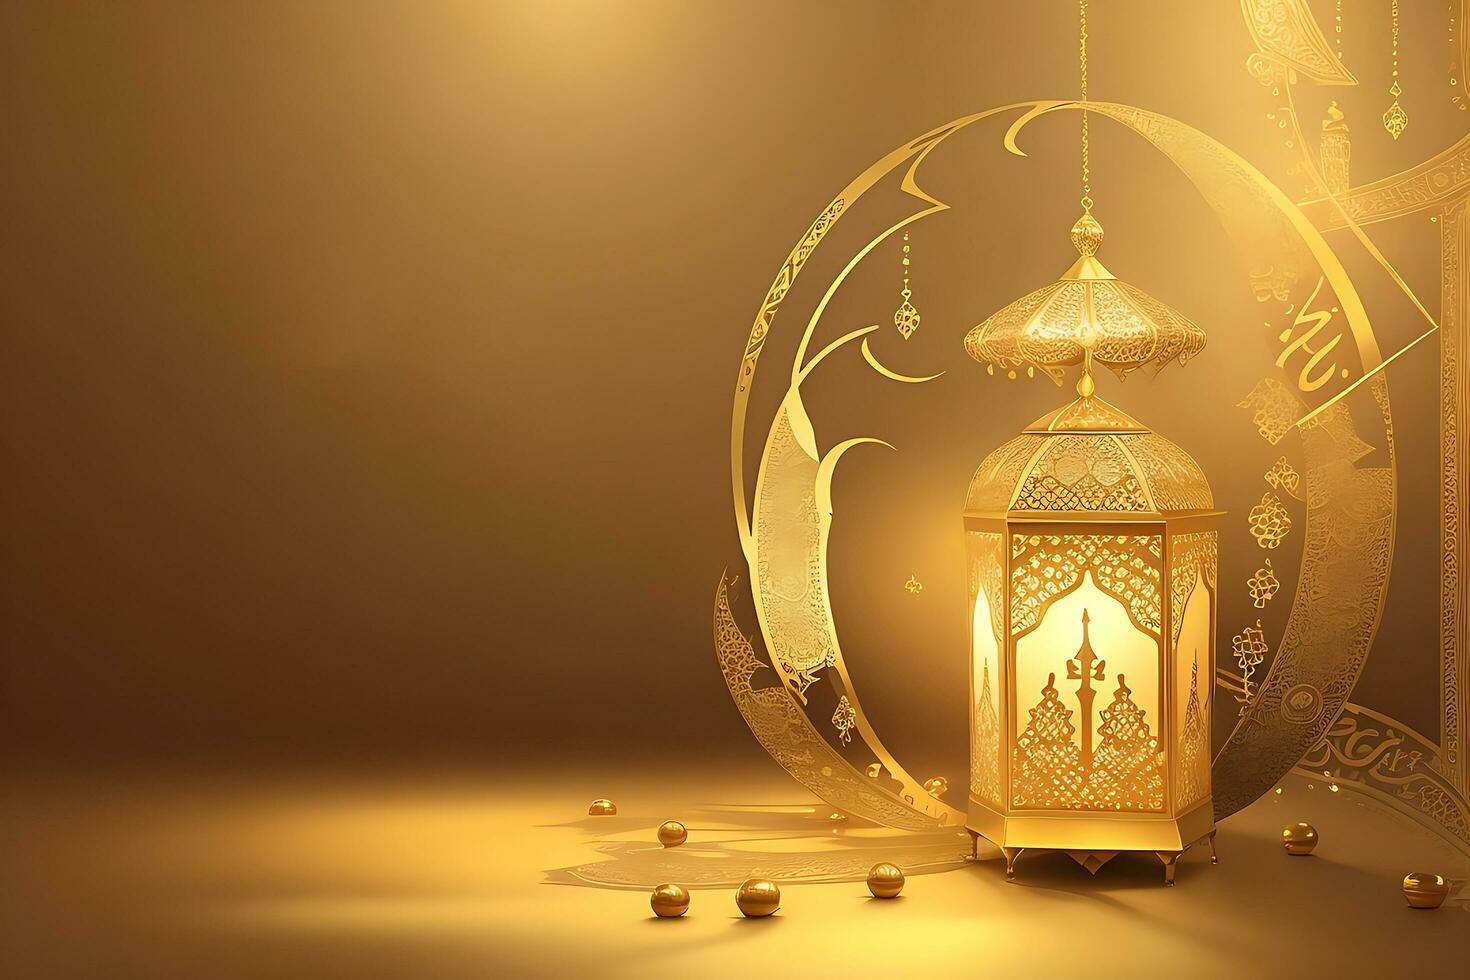 ai generato Arabo lanterna con ardente candela raggiante a notte per musulmano santo mese Ramadan kareem foto